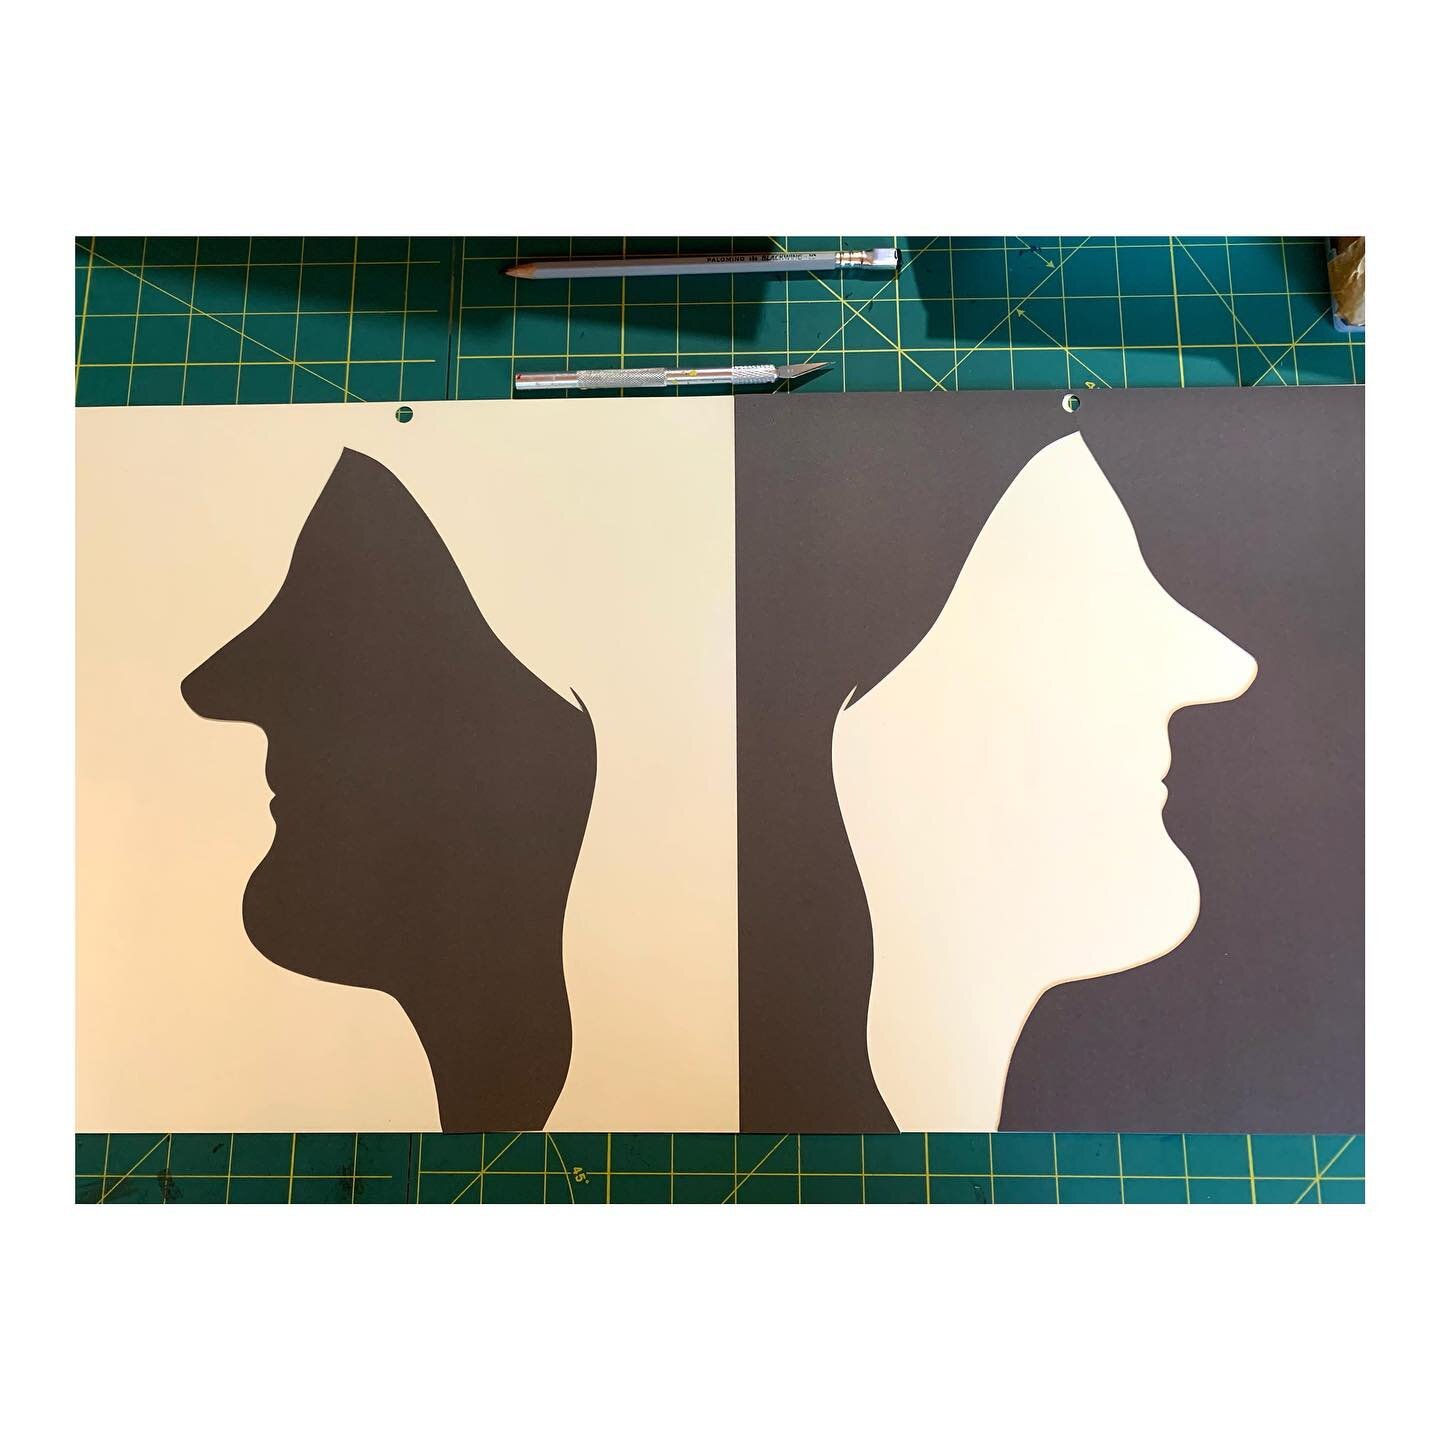 Gemini 3
Light and shadow parts 

#guildofcharlotteartists 
#collage
#minimaliststyle 
#janus 
#cutpaper